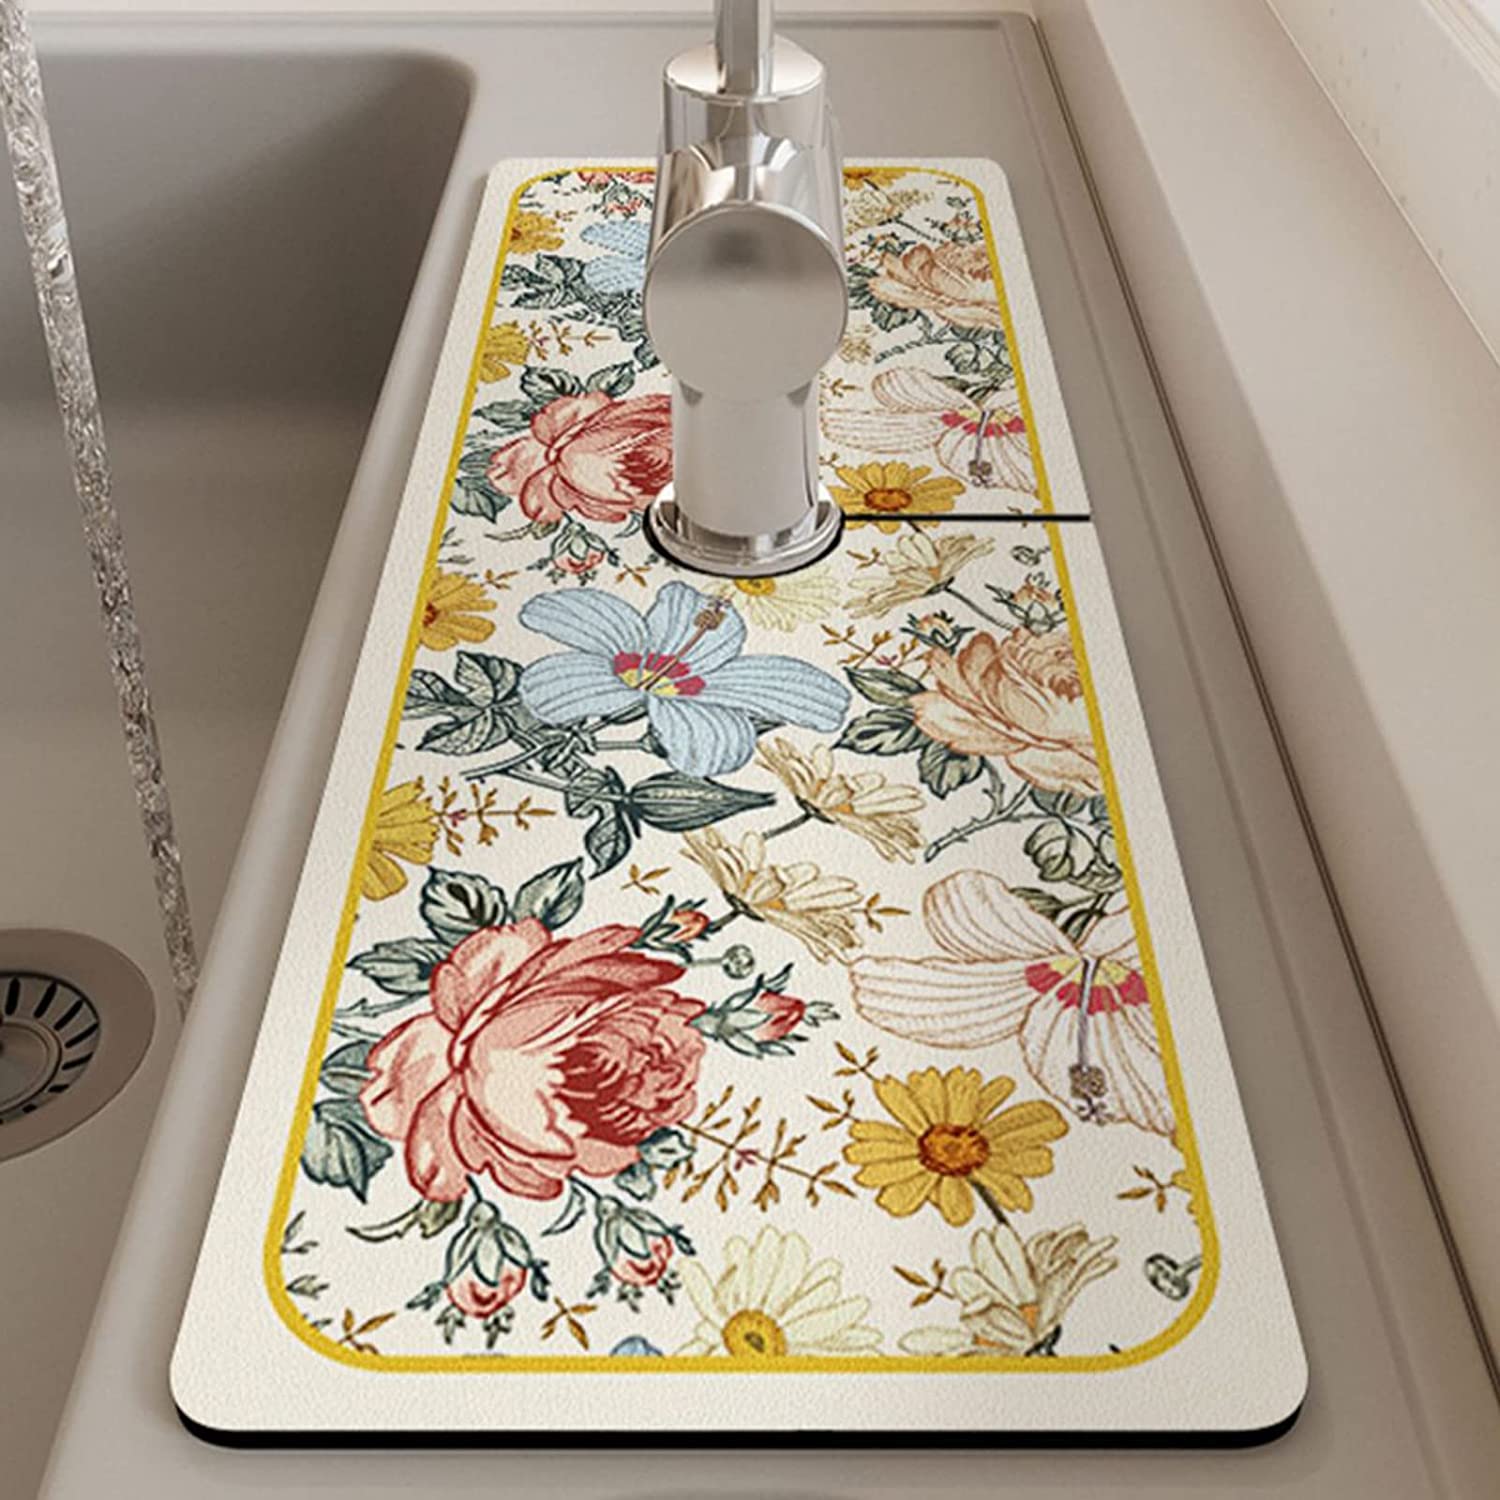 LELEBEAR Floral Sink Faucet Absorbent Mat, Self Absorbent Draining